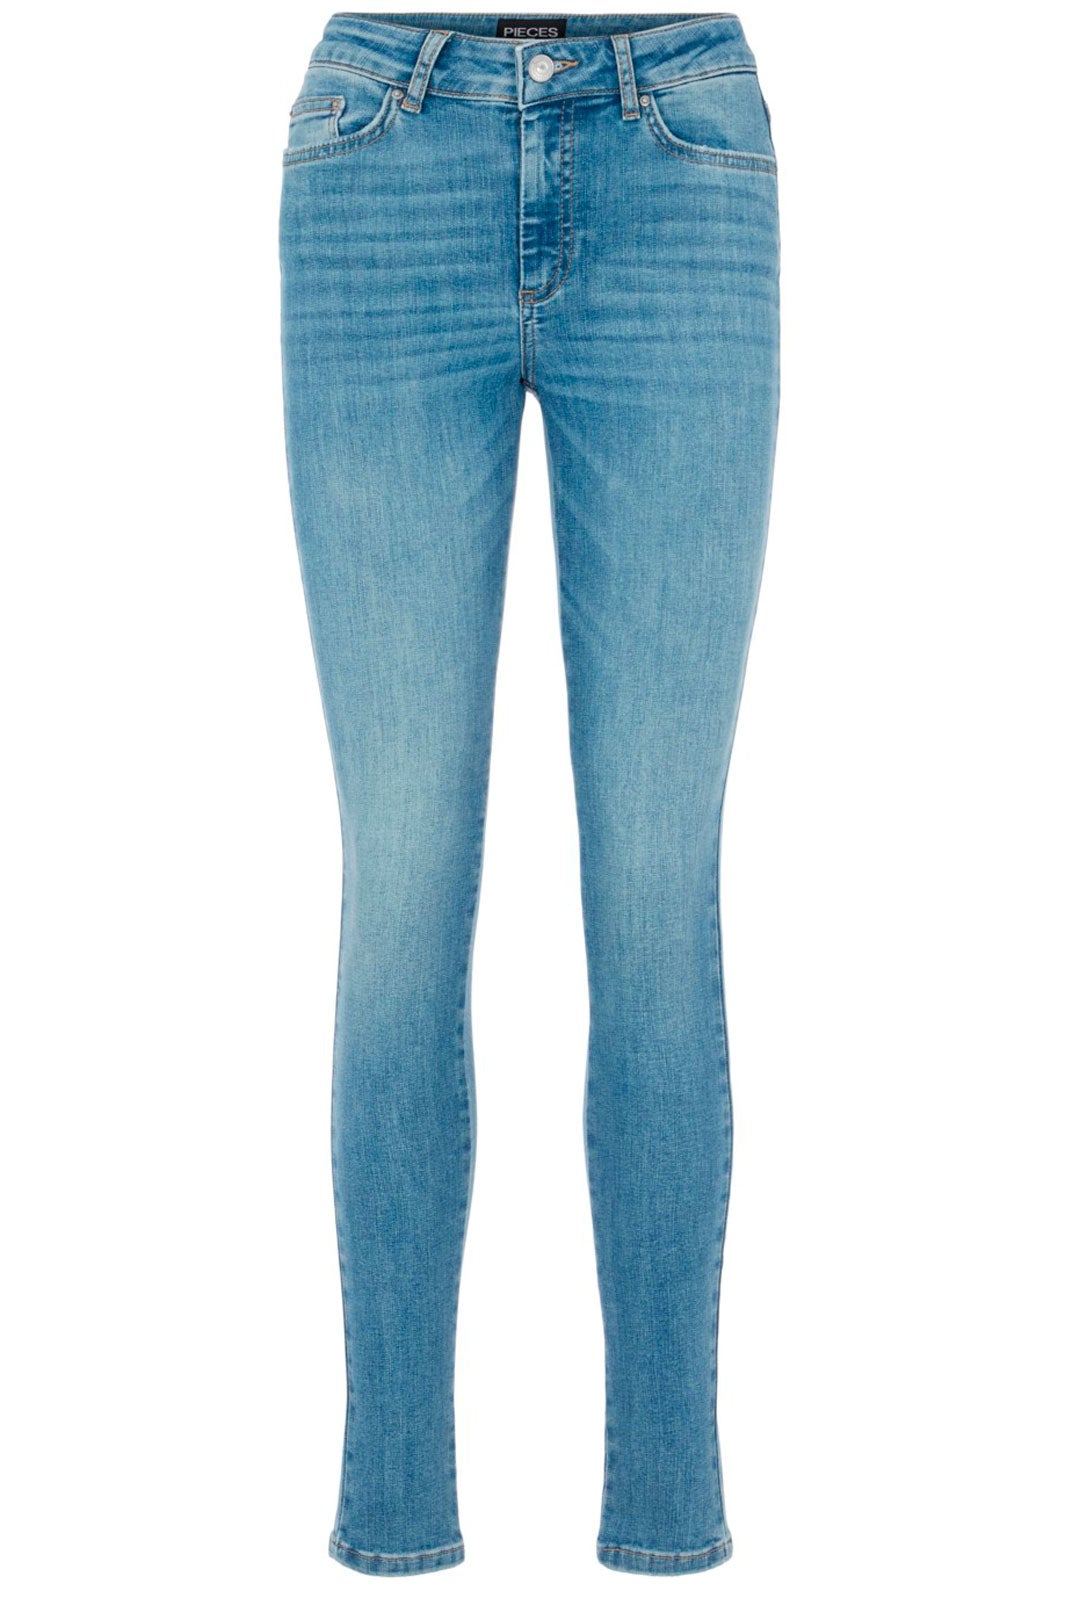 PIECES - Delly Skn MW Jeans Noos - Light Blue Denim Jeans 